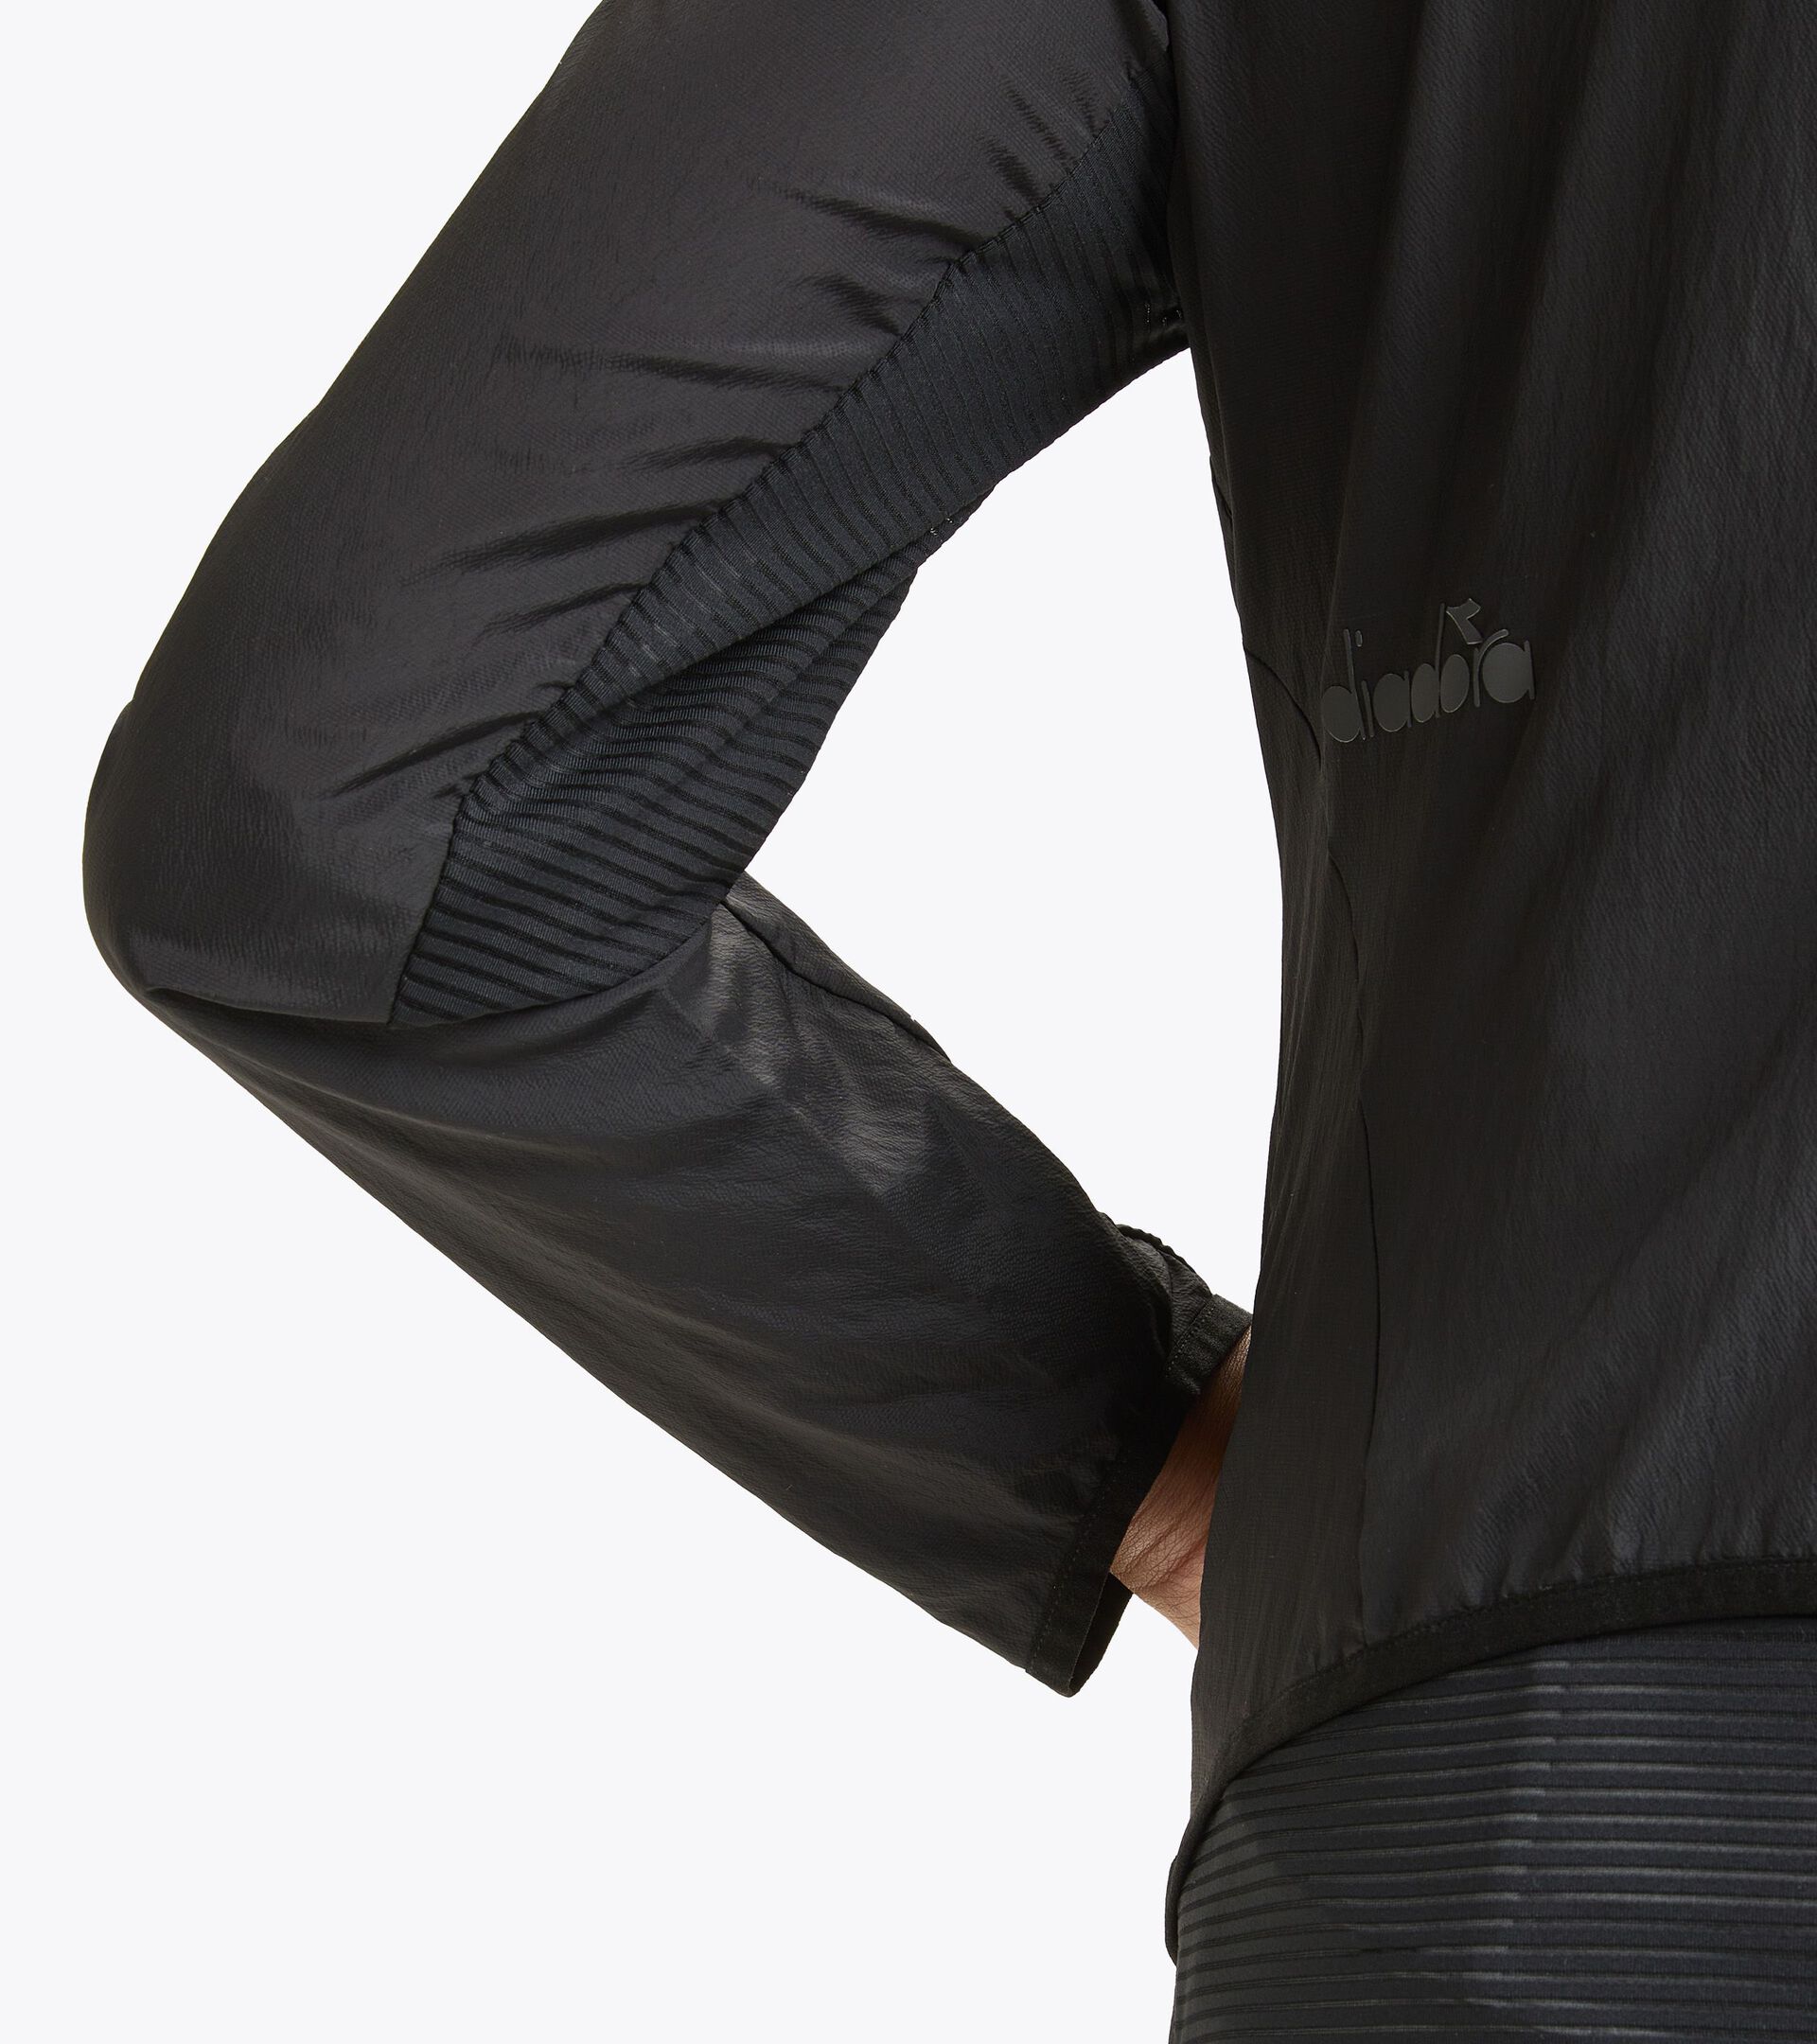 Windproof water-resistant jacket - Women L. WINDBREAKER BLACK - Diadora